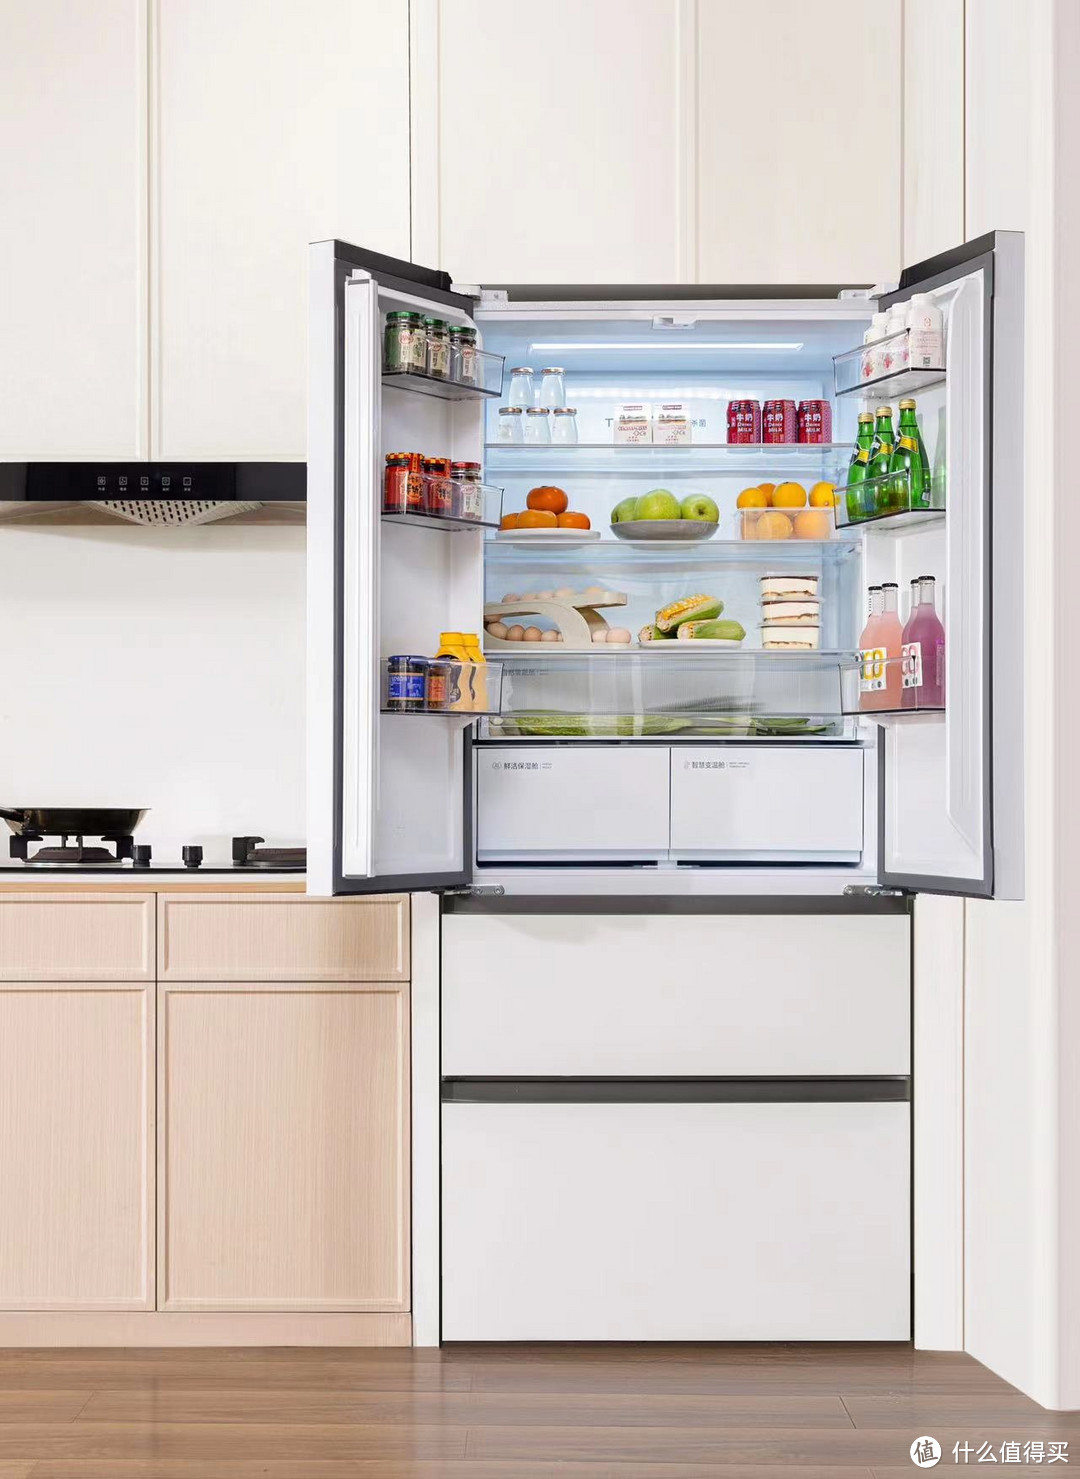 TCL 超薄零嵌法式冰箱 T9-DQ:引领时尚潮流的智能之选